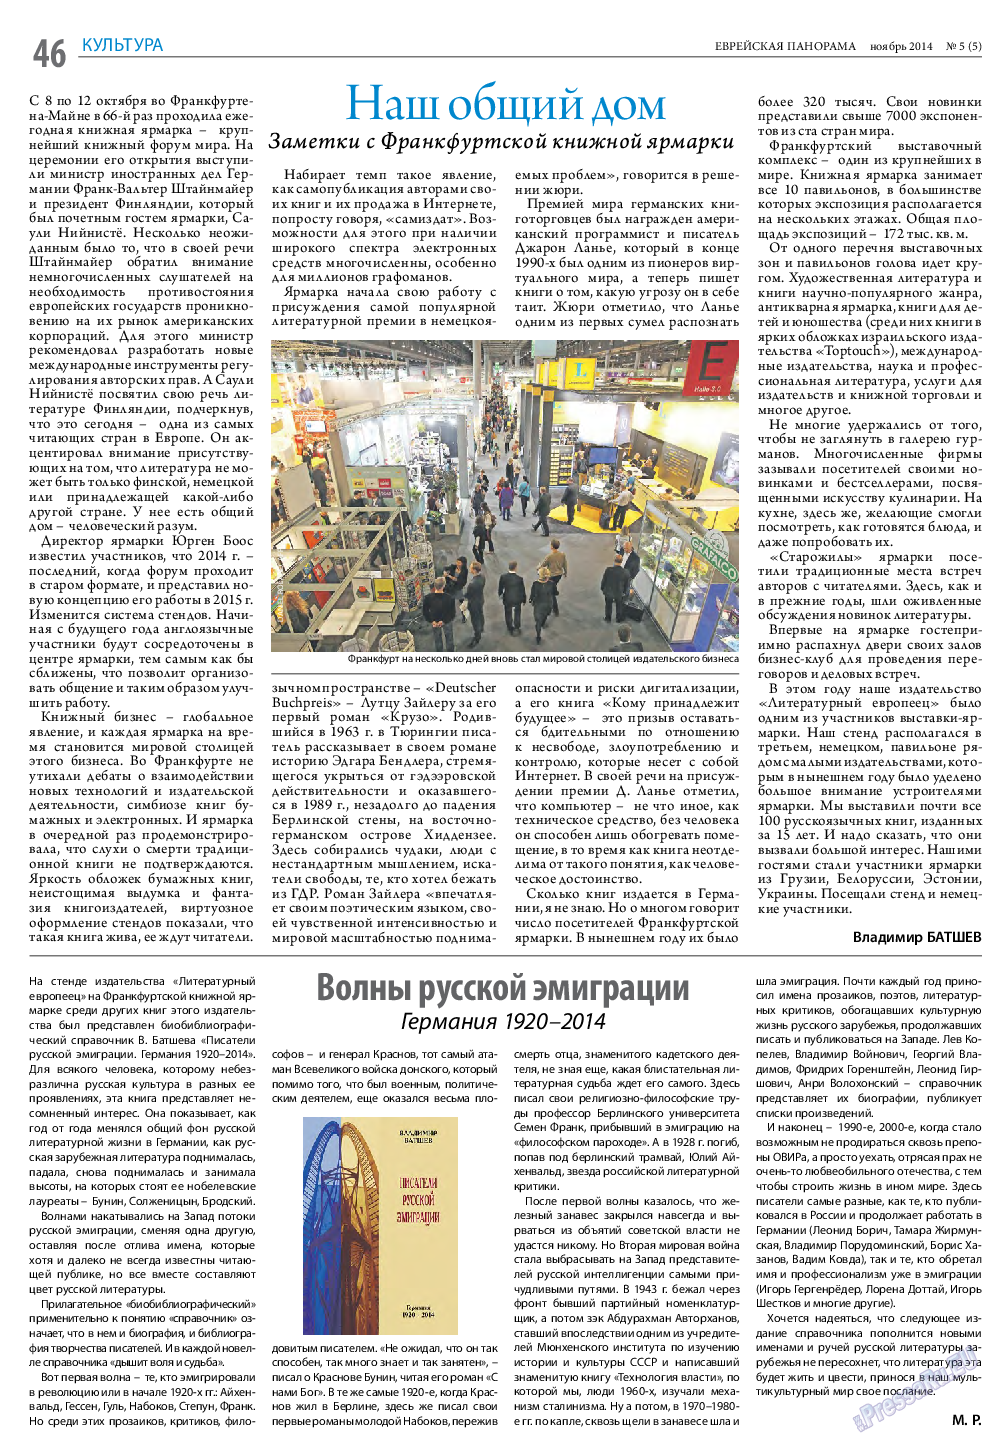 Еврейская панорама, газета. 2014 №5 стр.46